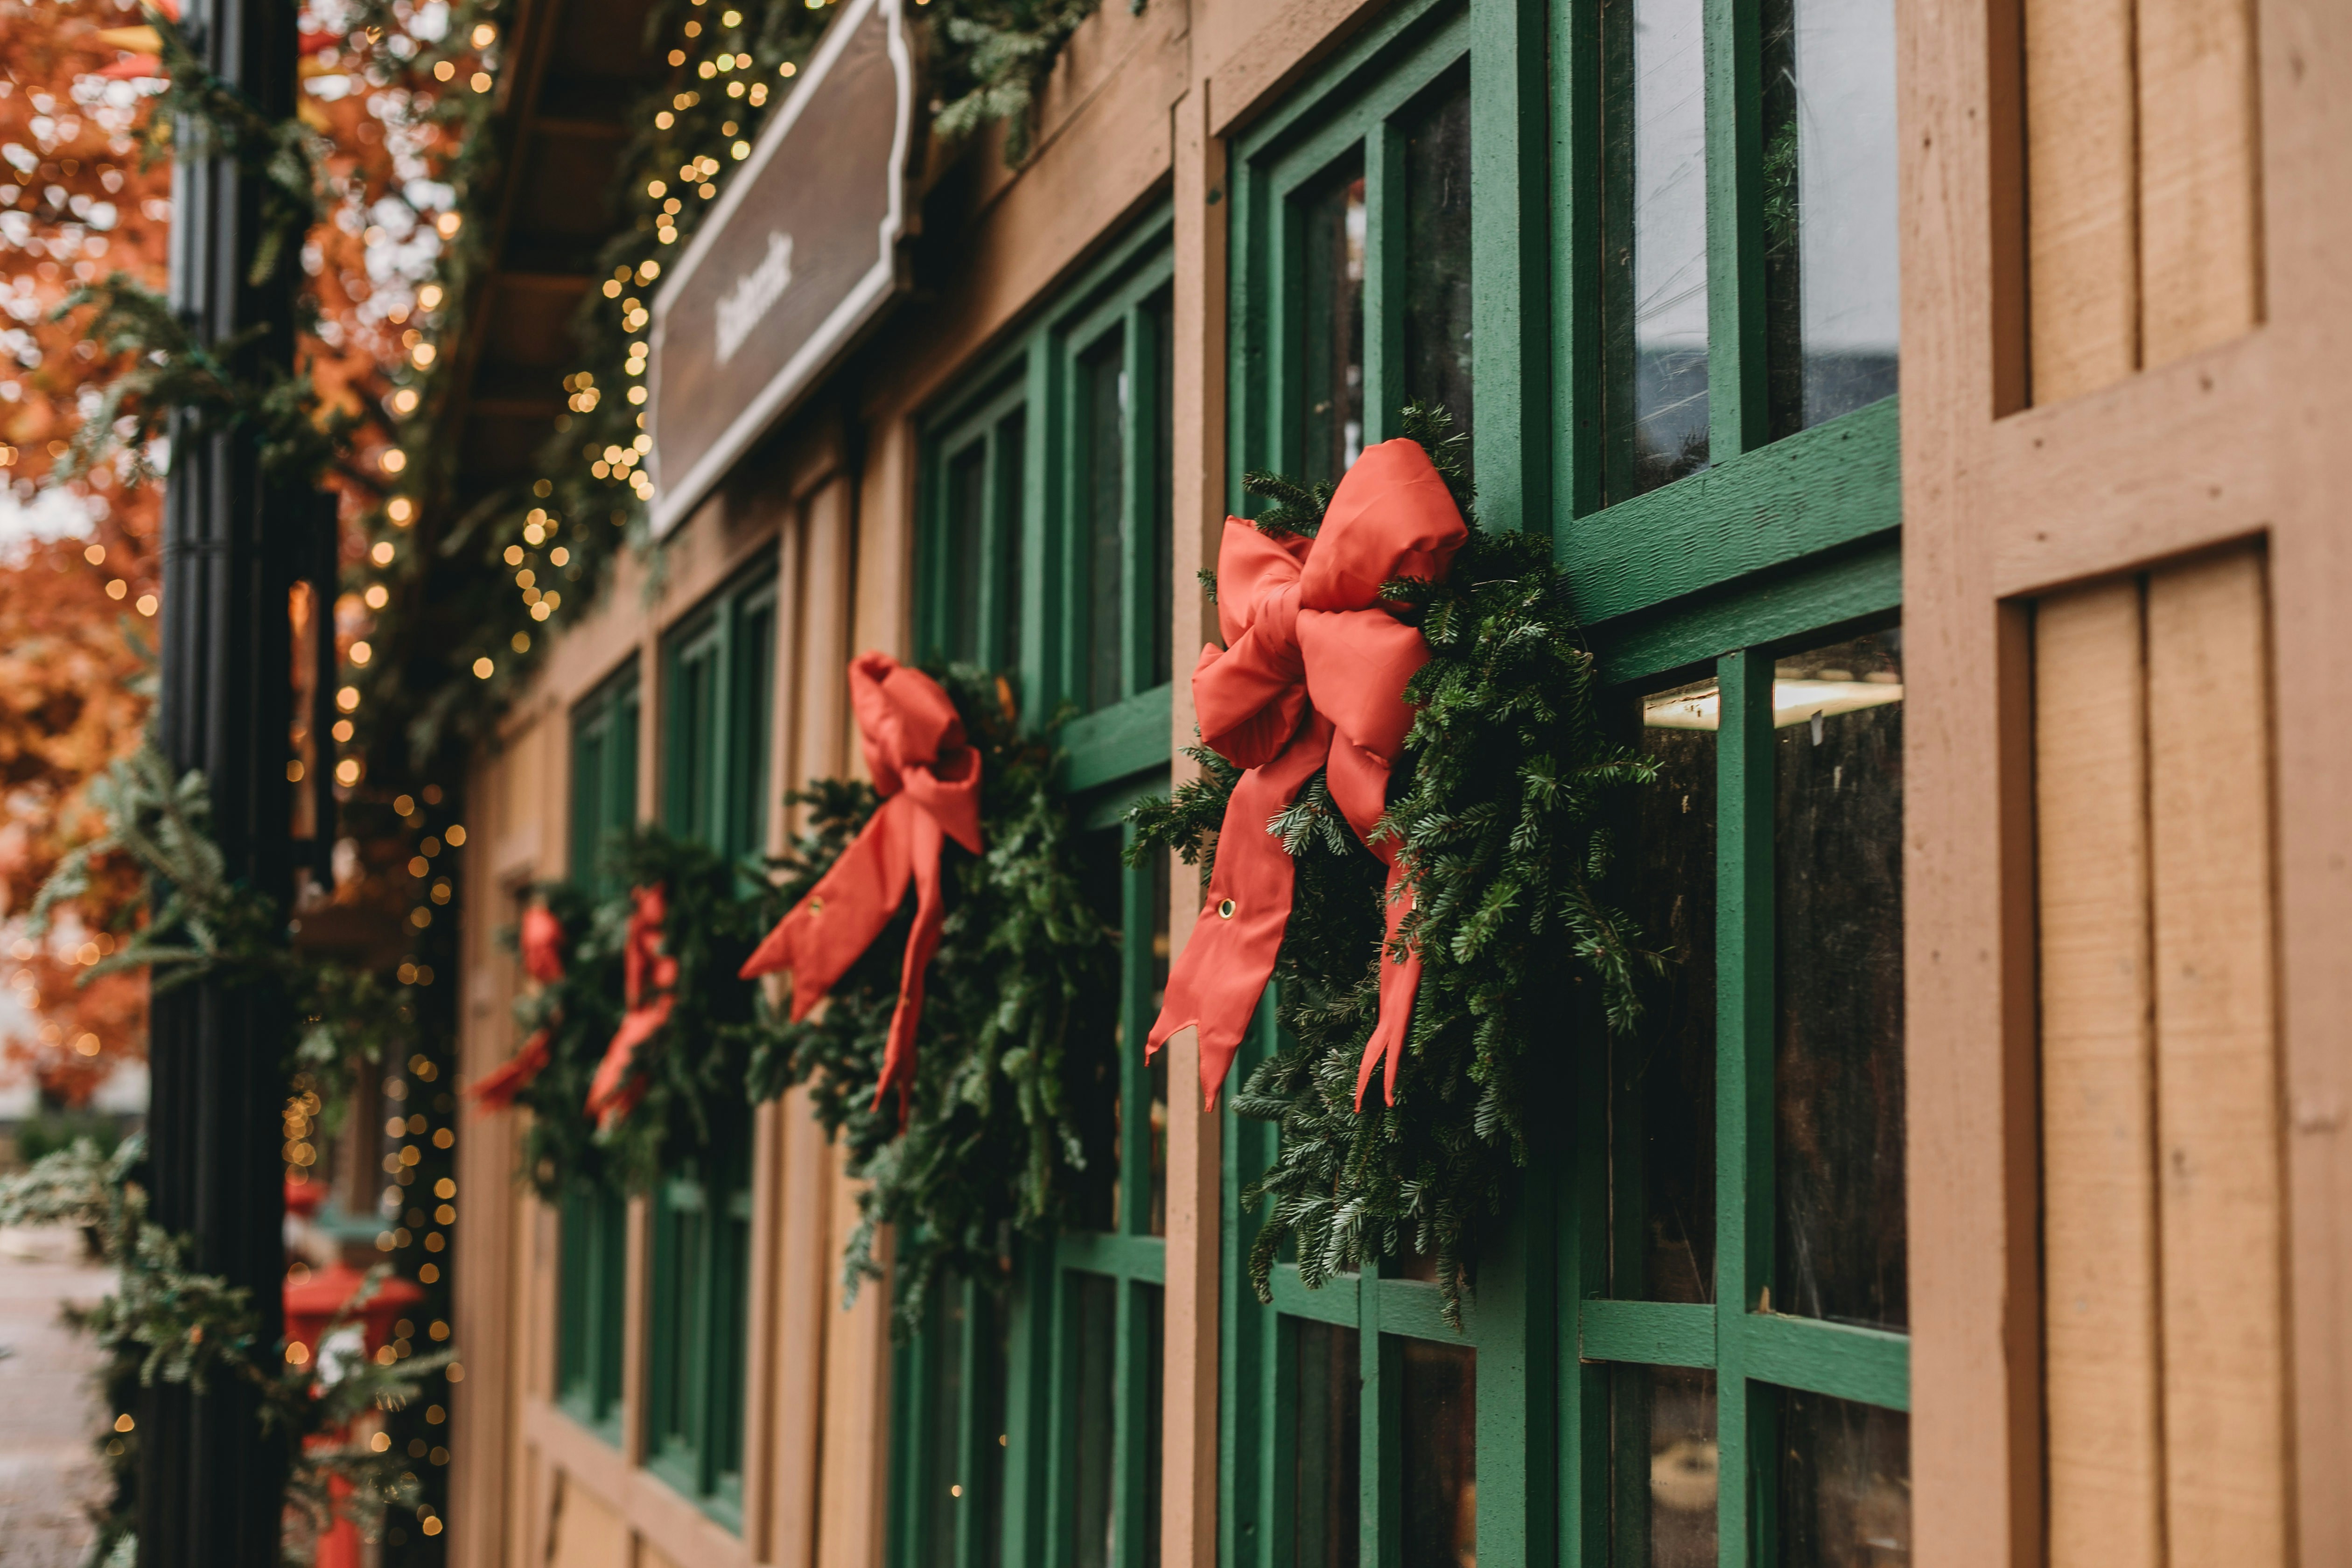 Wreaths at the Carmel Christkindlmarkt